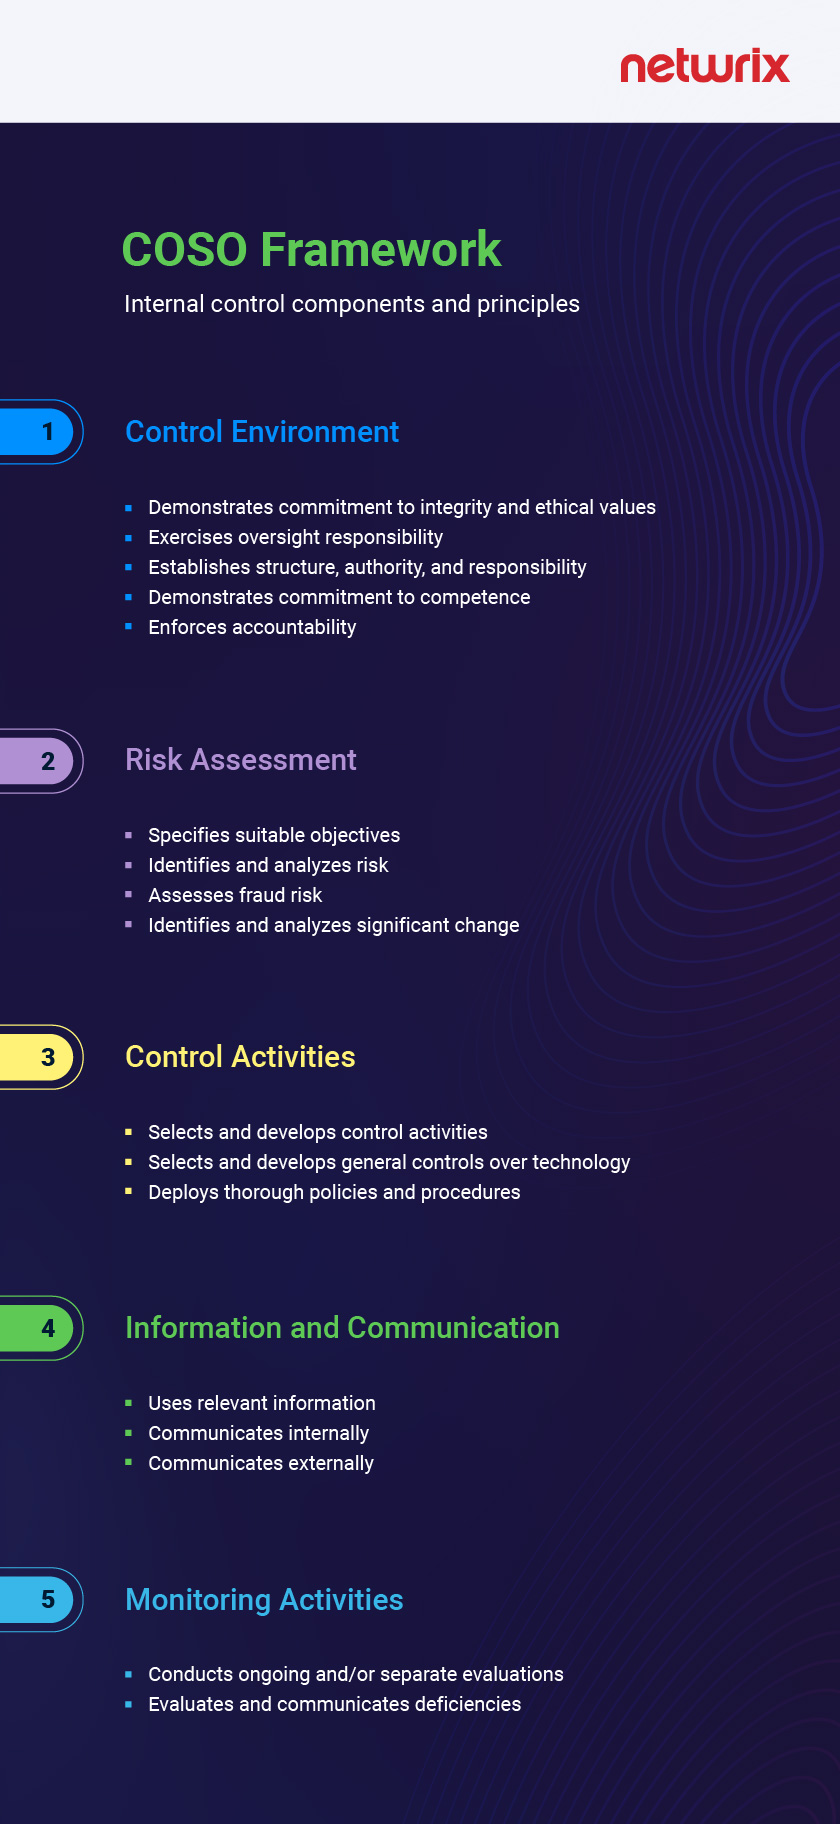 COSO framework. Internal controls and principles